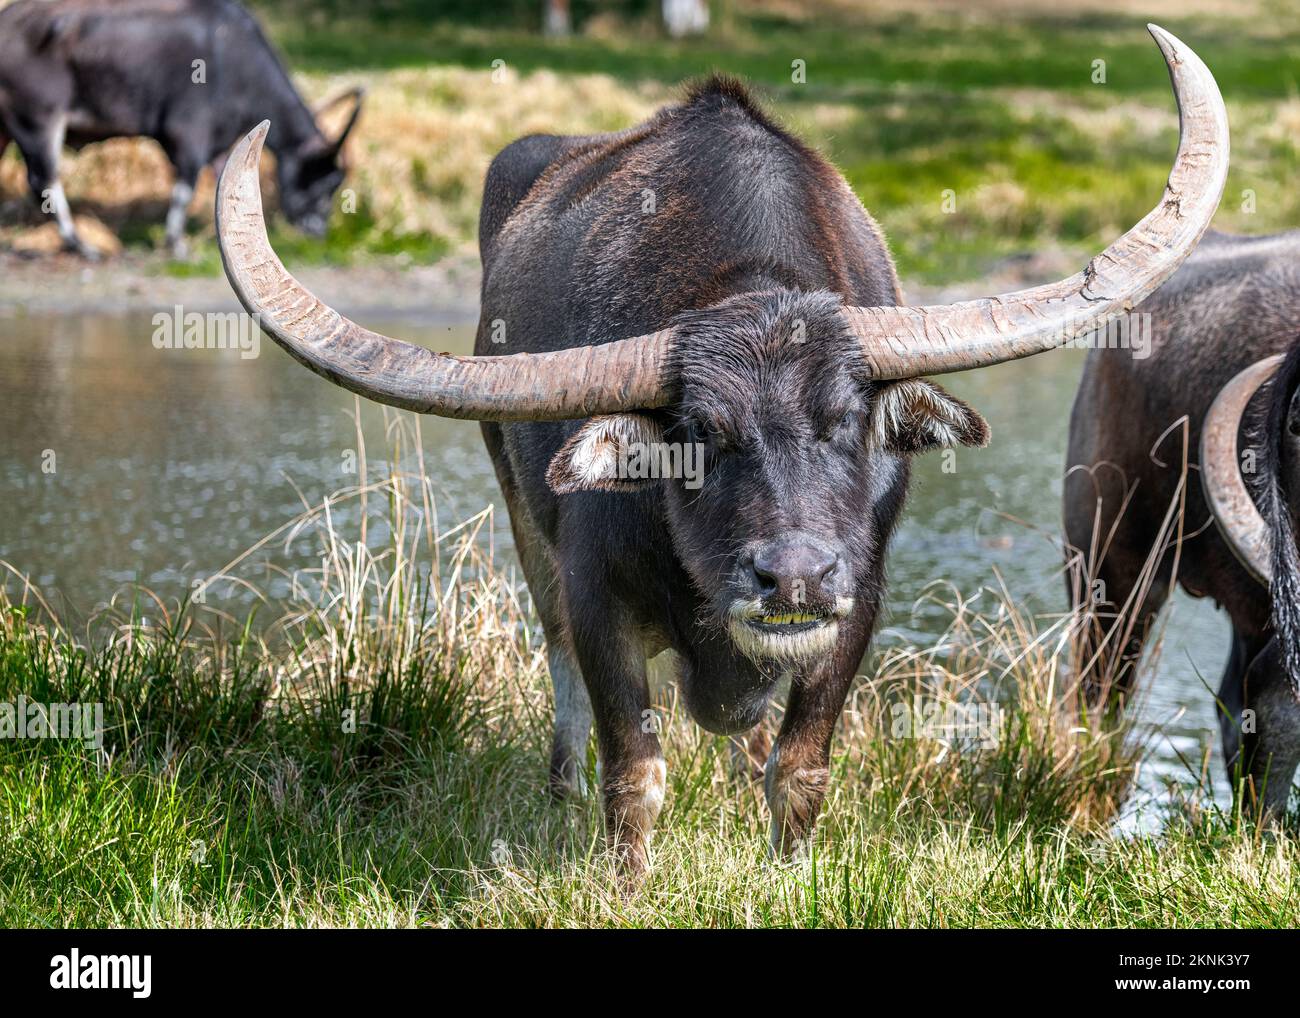 Longhorn buffalo with huge horns sneering at camera Stock Photo